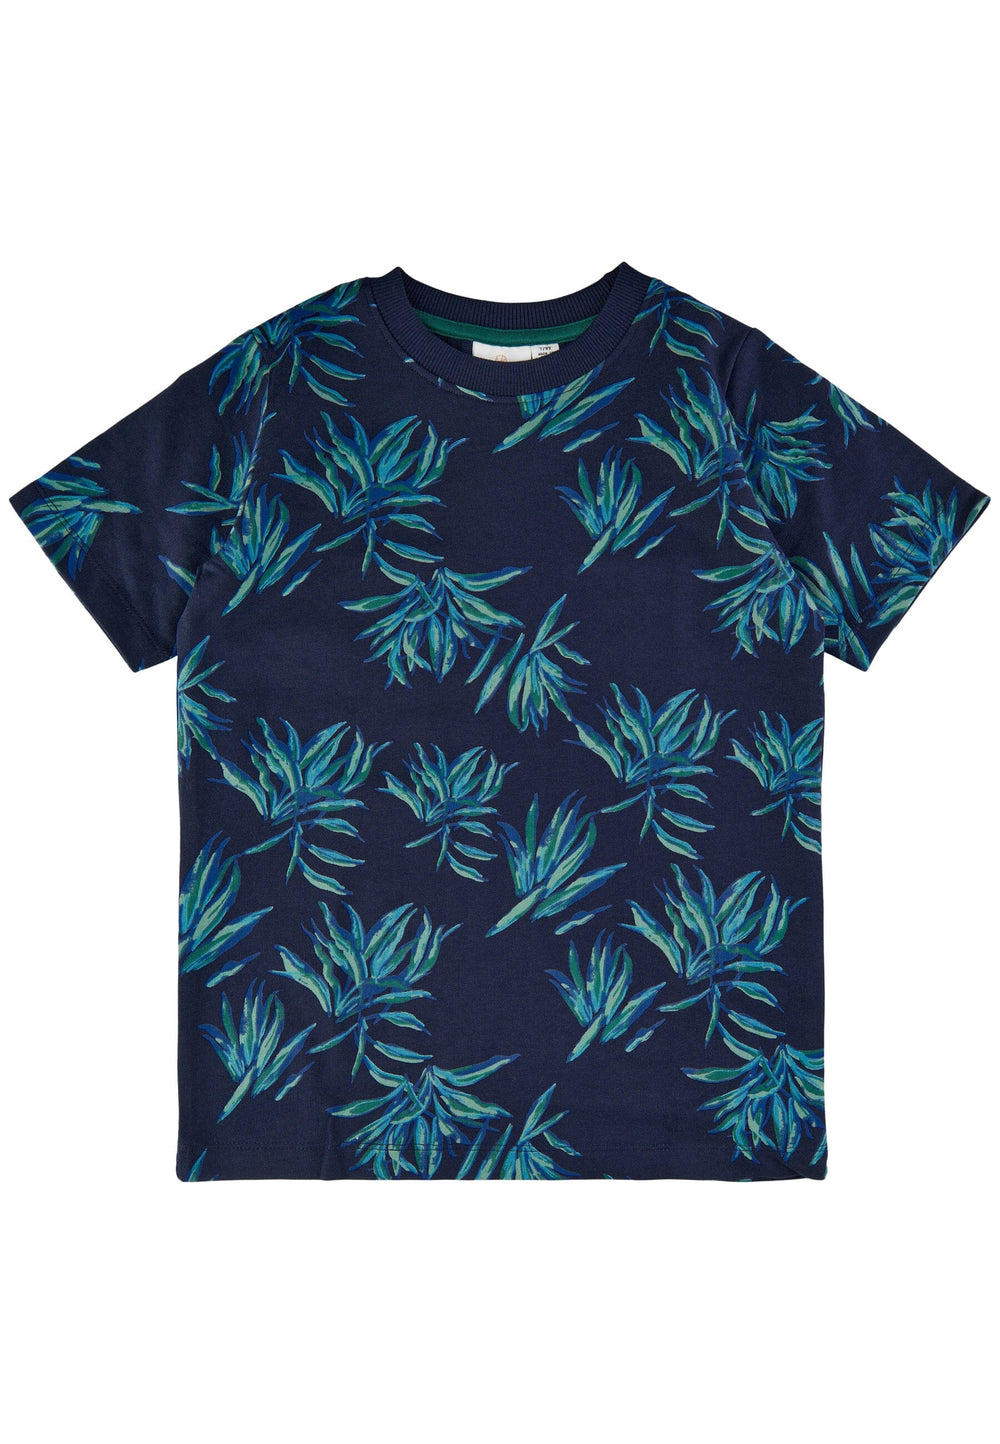 The New - Tngenuine S_S Tee - Navy Blazer Leaf Aop T-shirts 